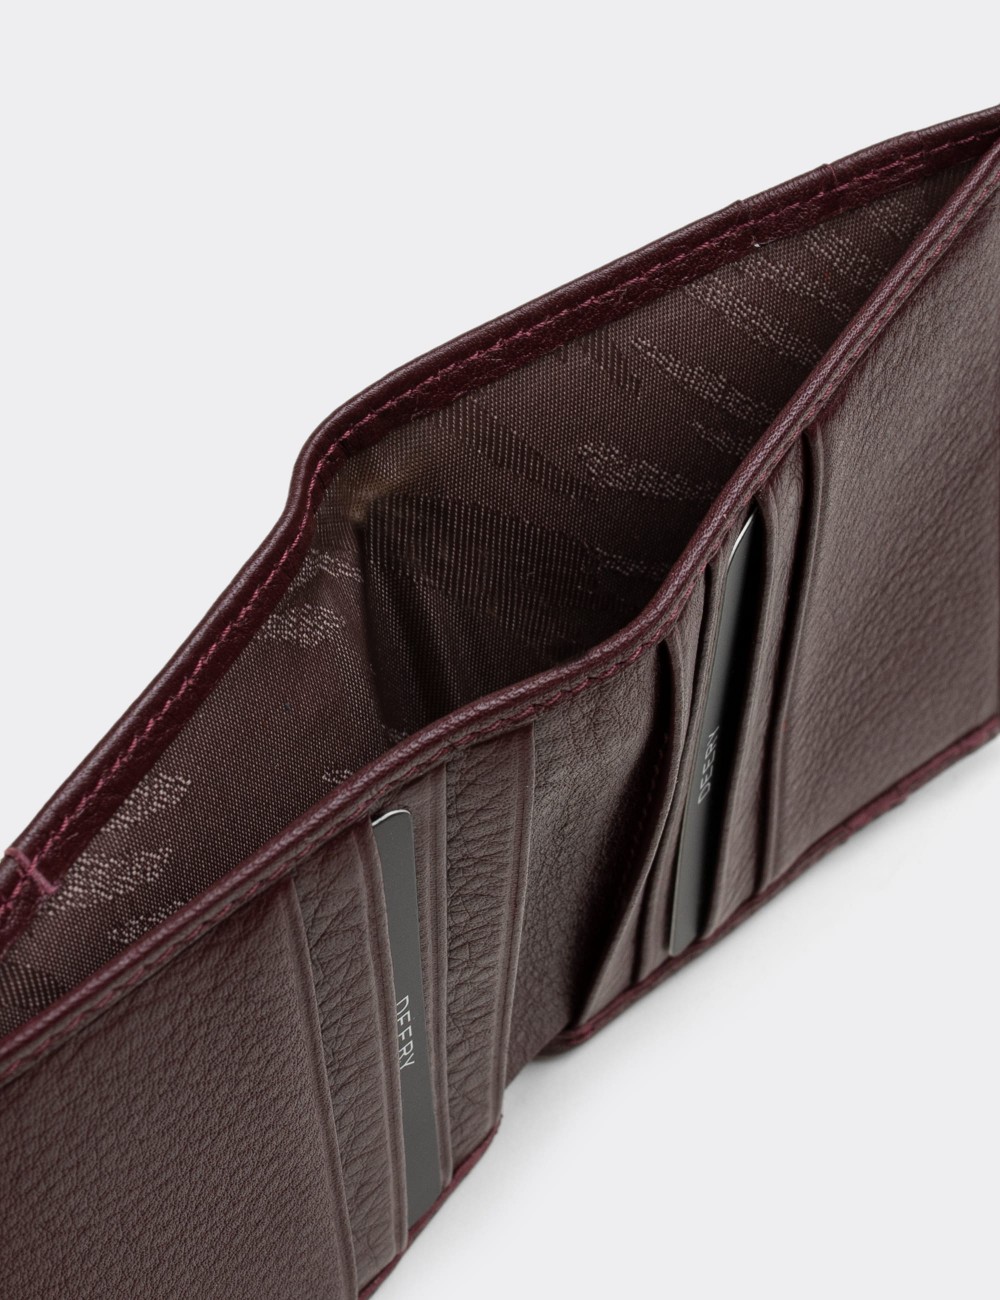  Leather Burgundy Men's Wallet - 00518MBRDZ01